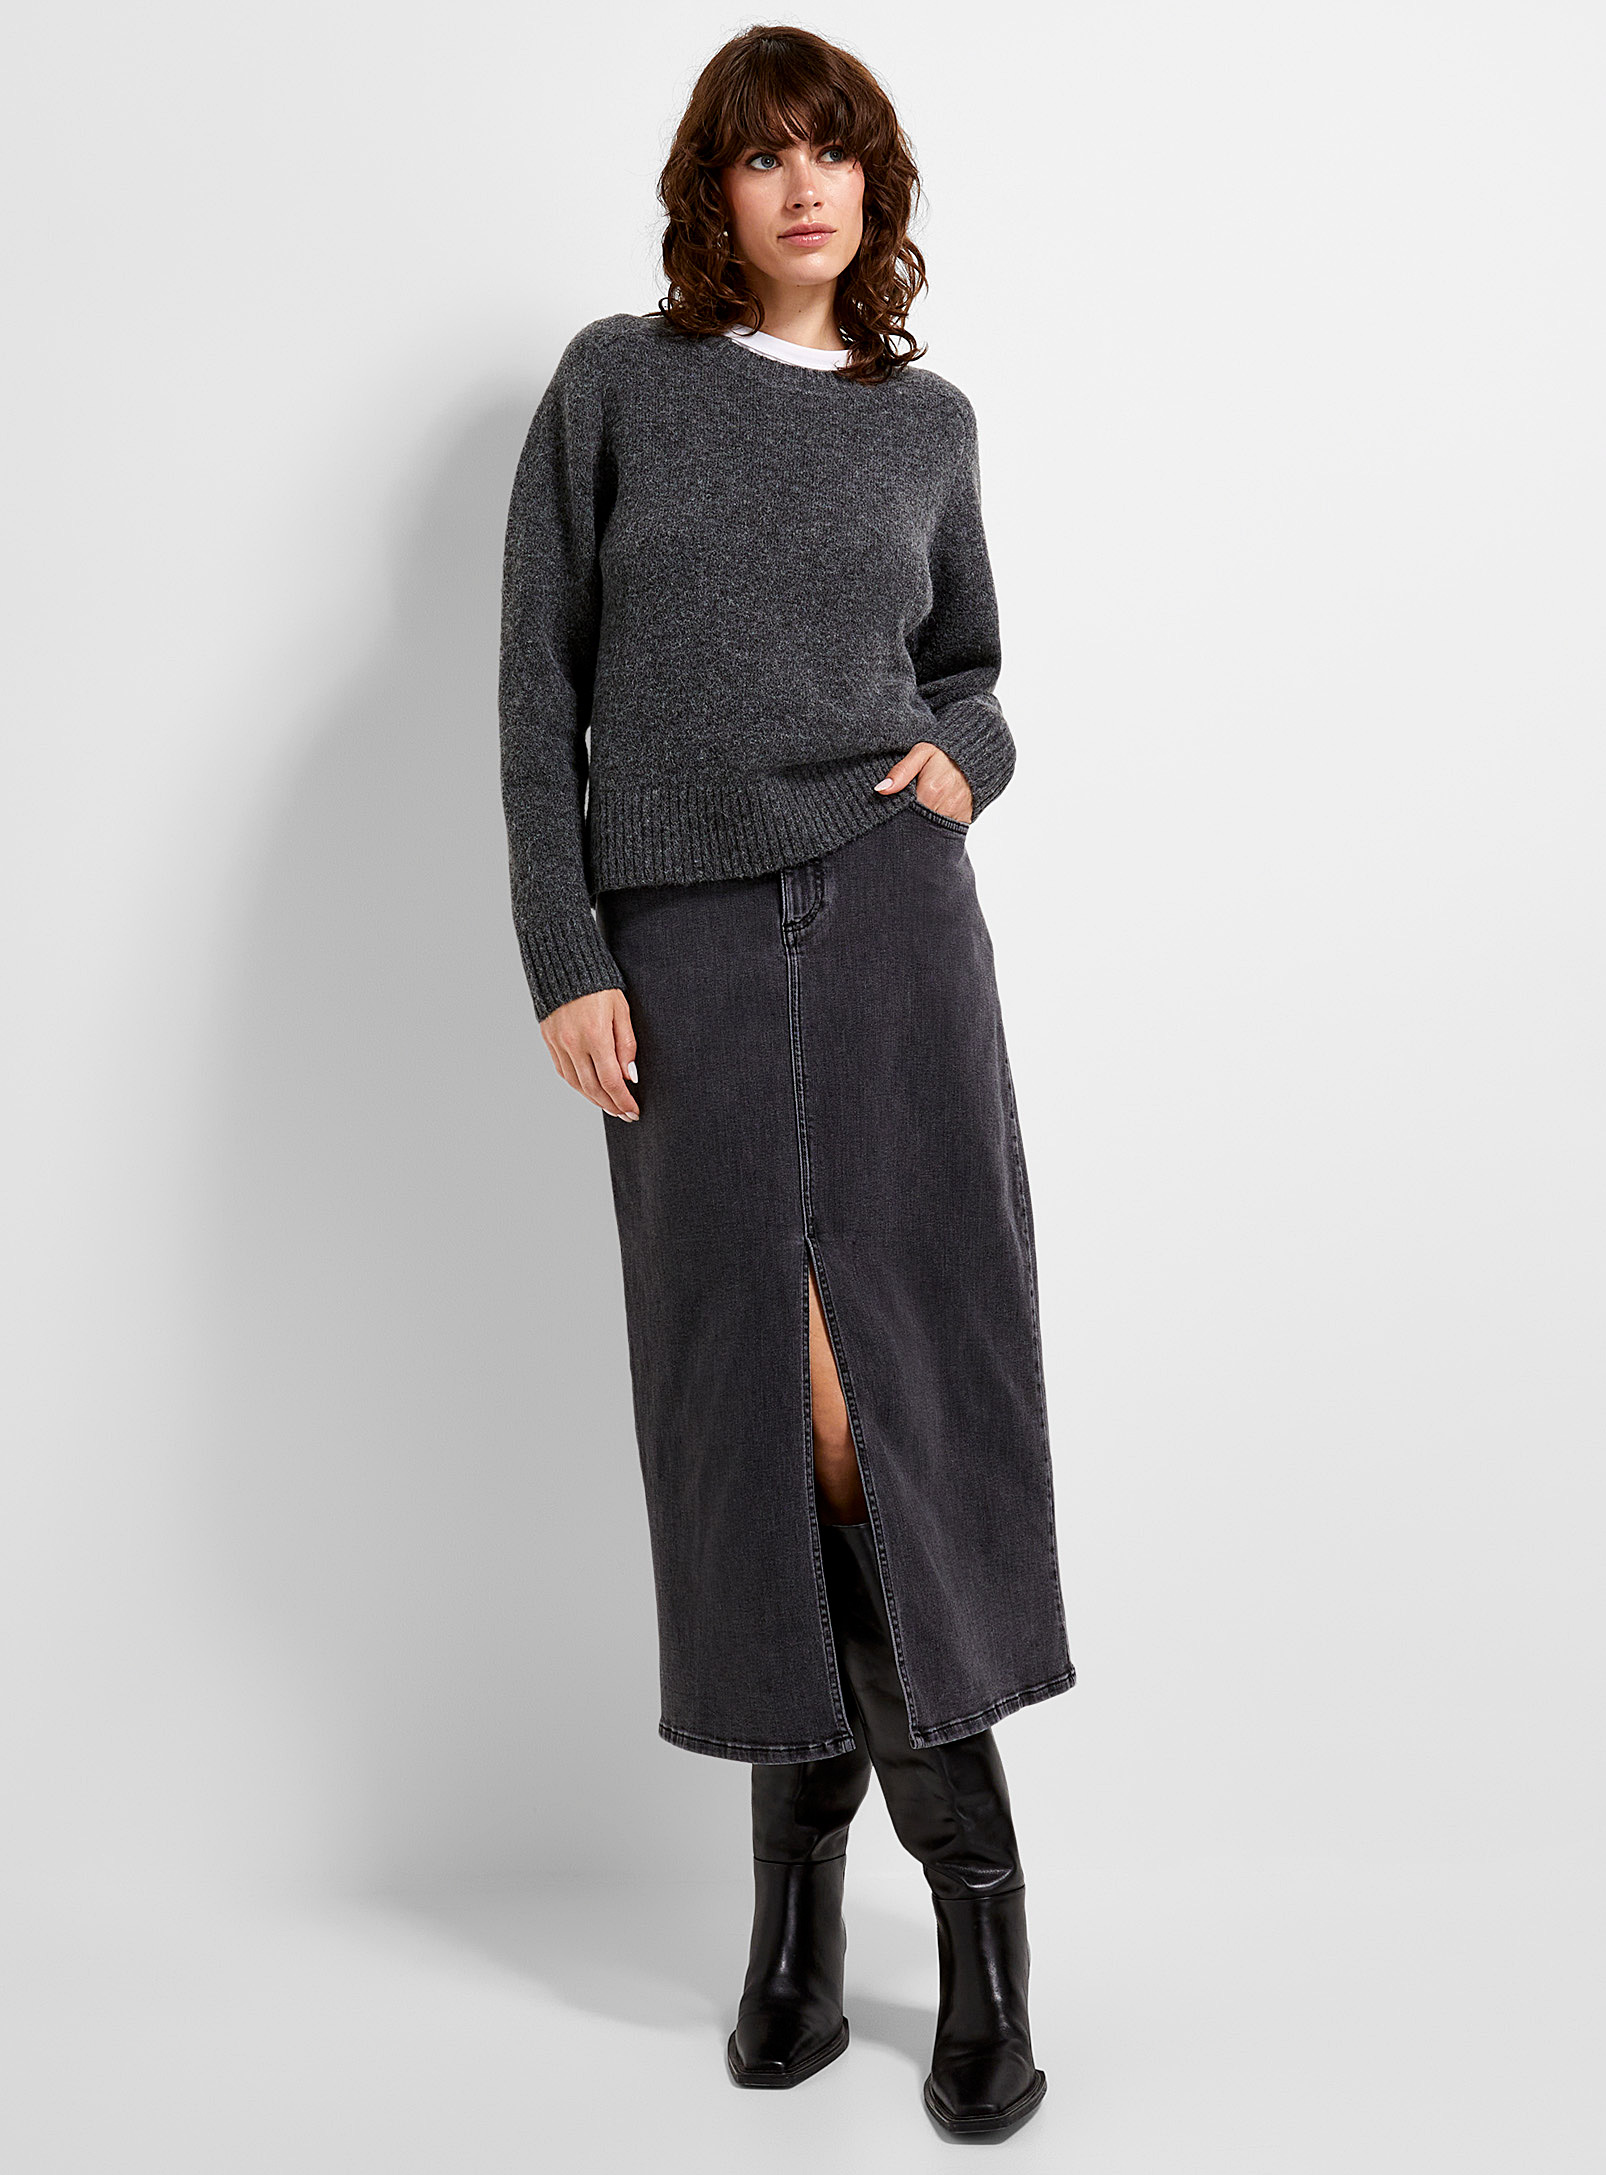 Contemporaine - Women's Faded grey denim skirt